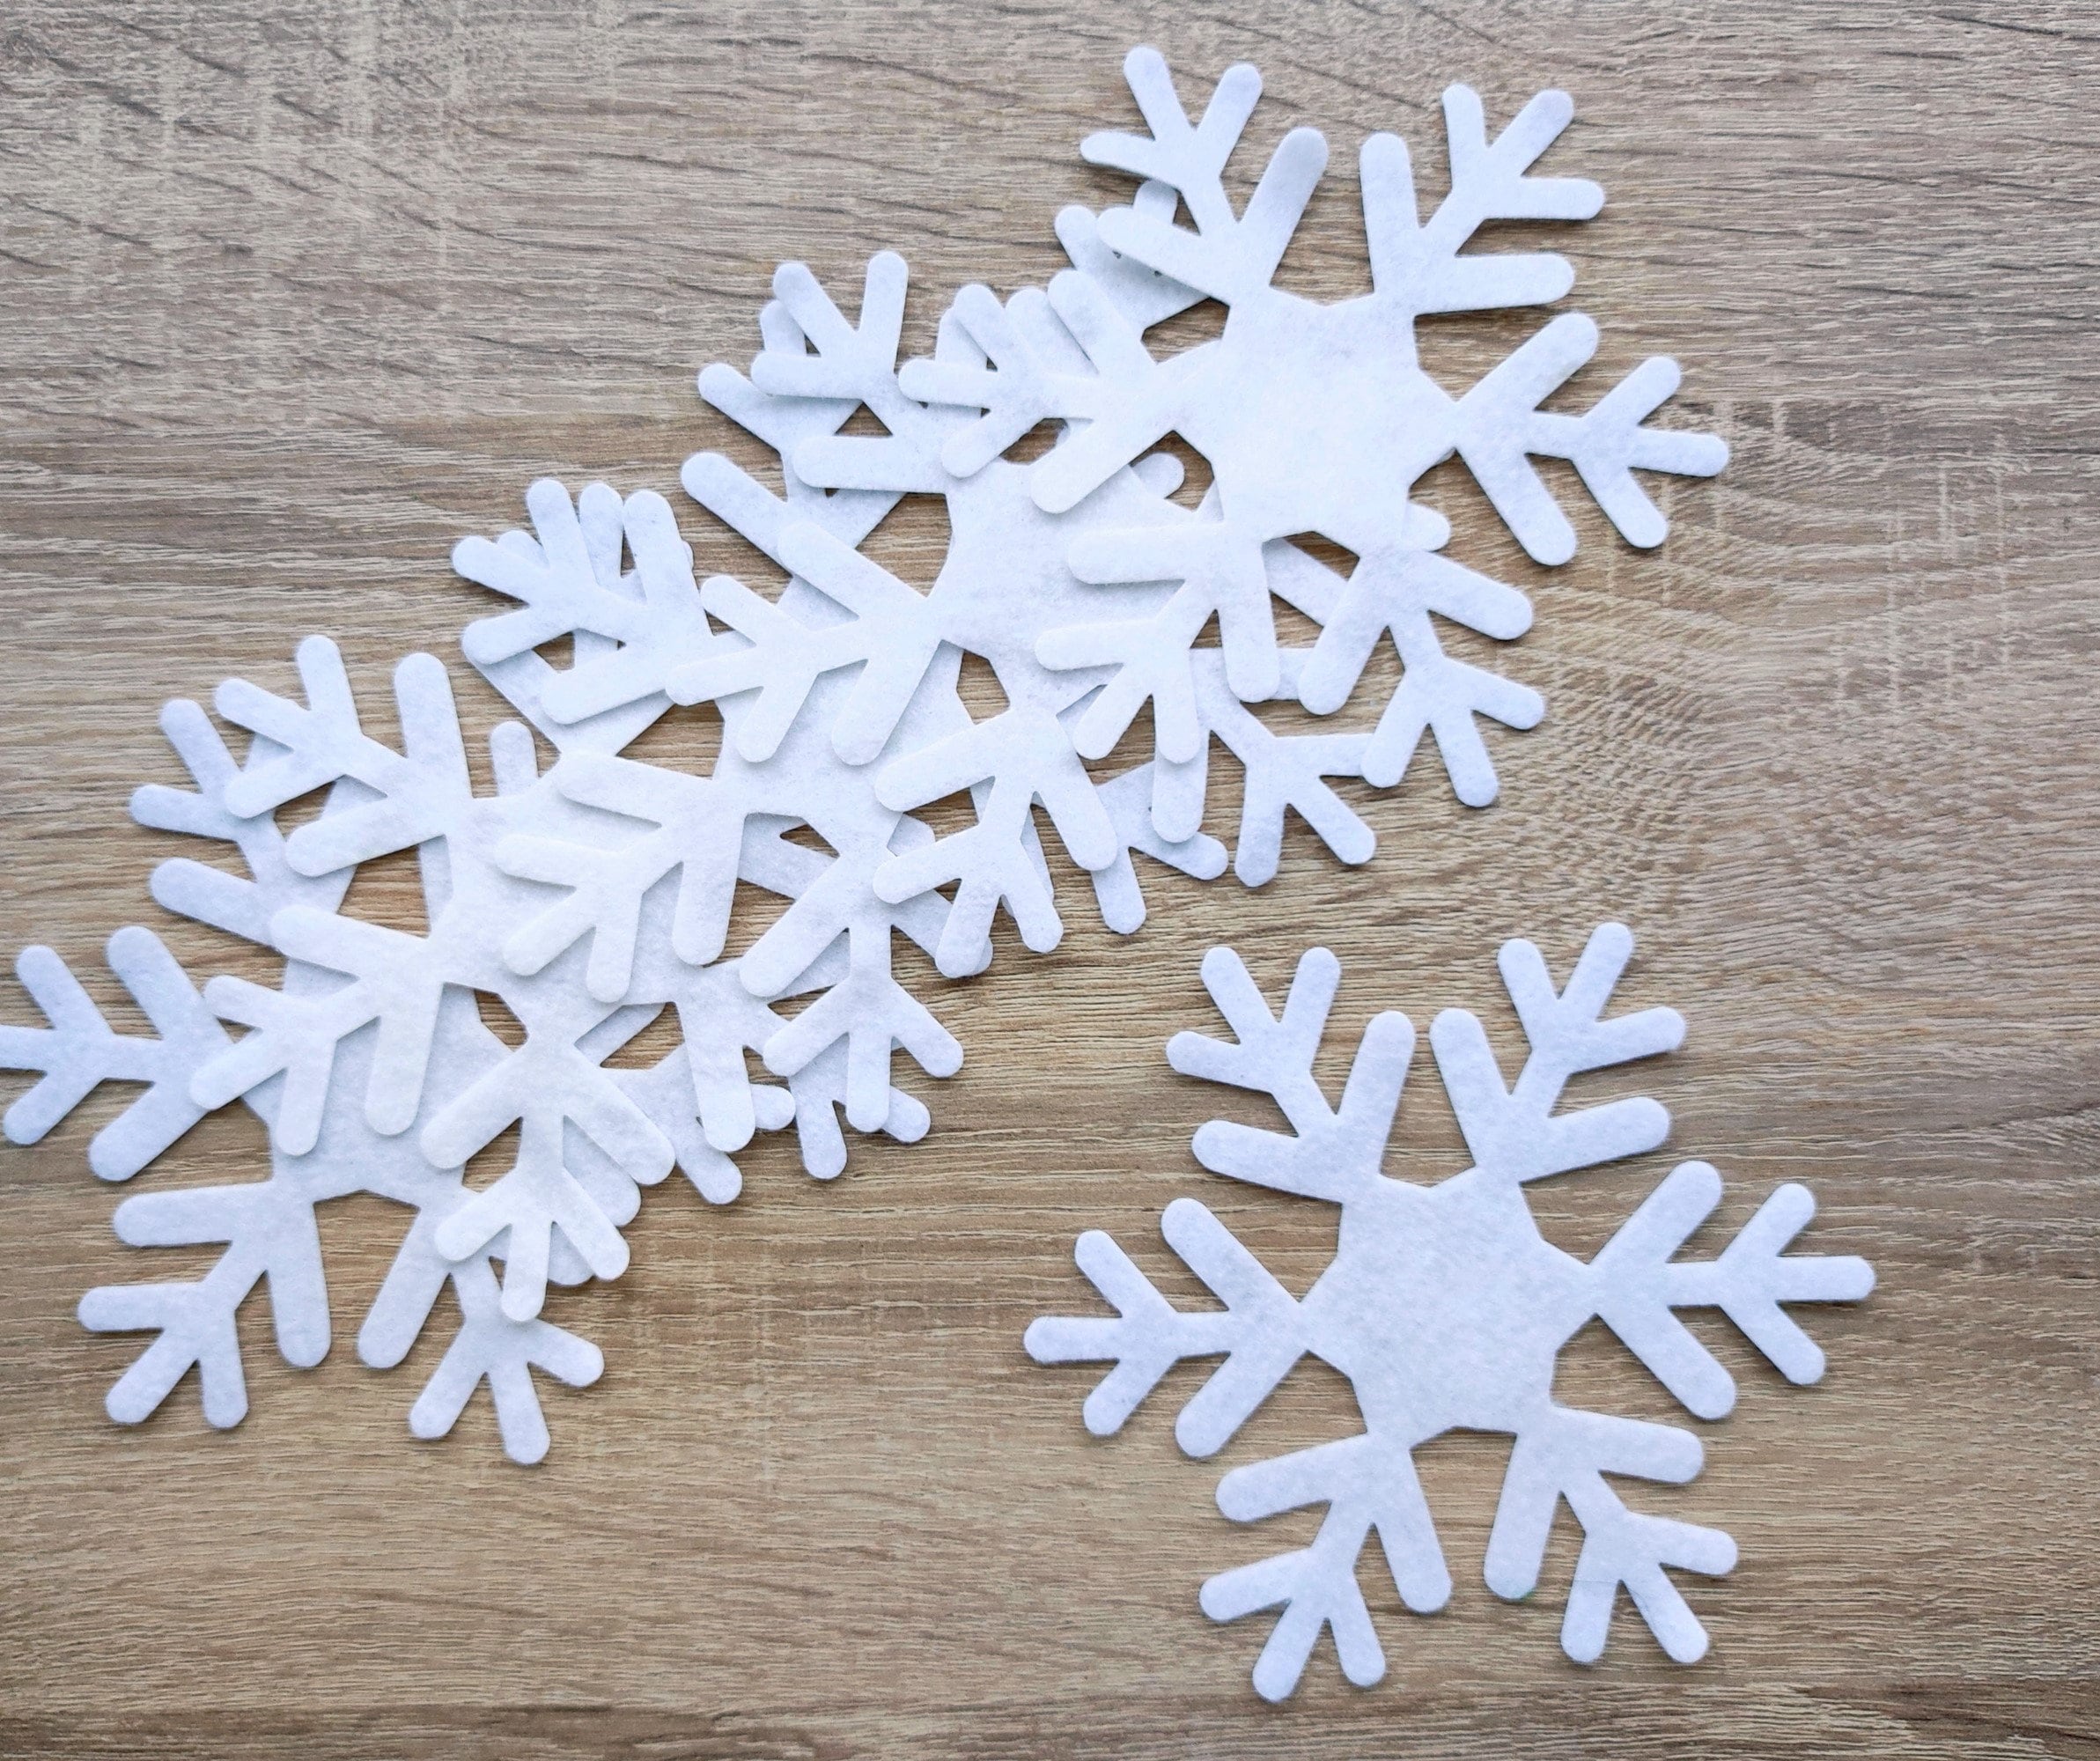 Grey and White Felt Snowflakes Mix, 30 Die Cut Felt Snowflakes